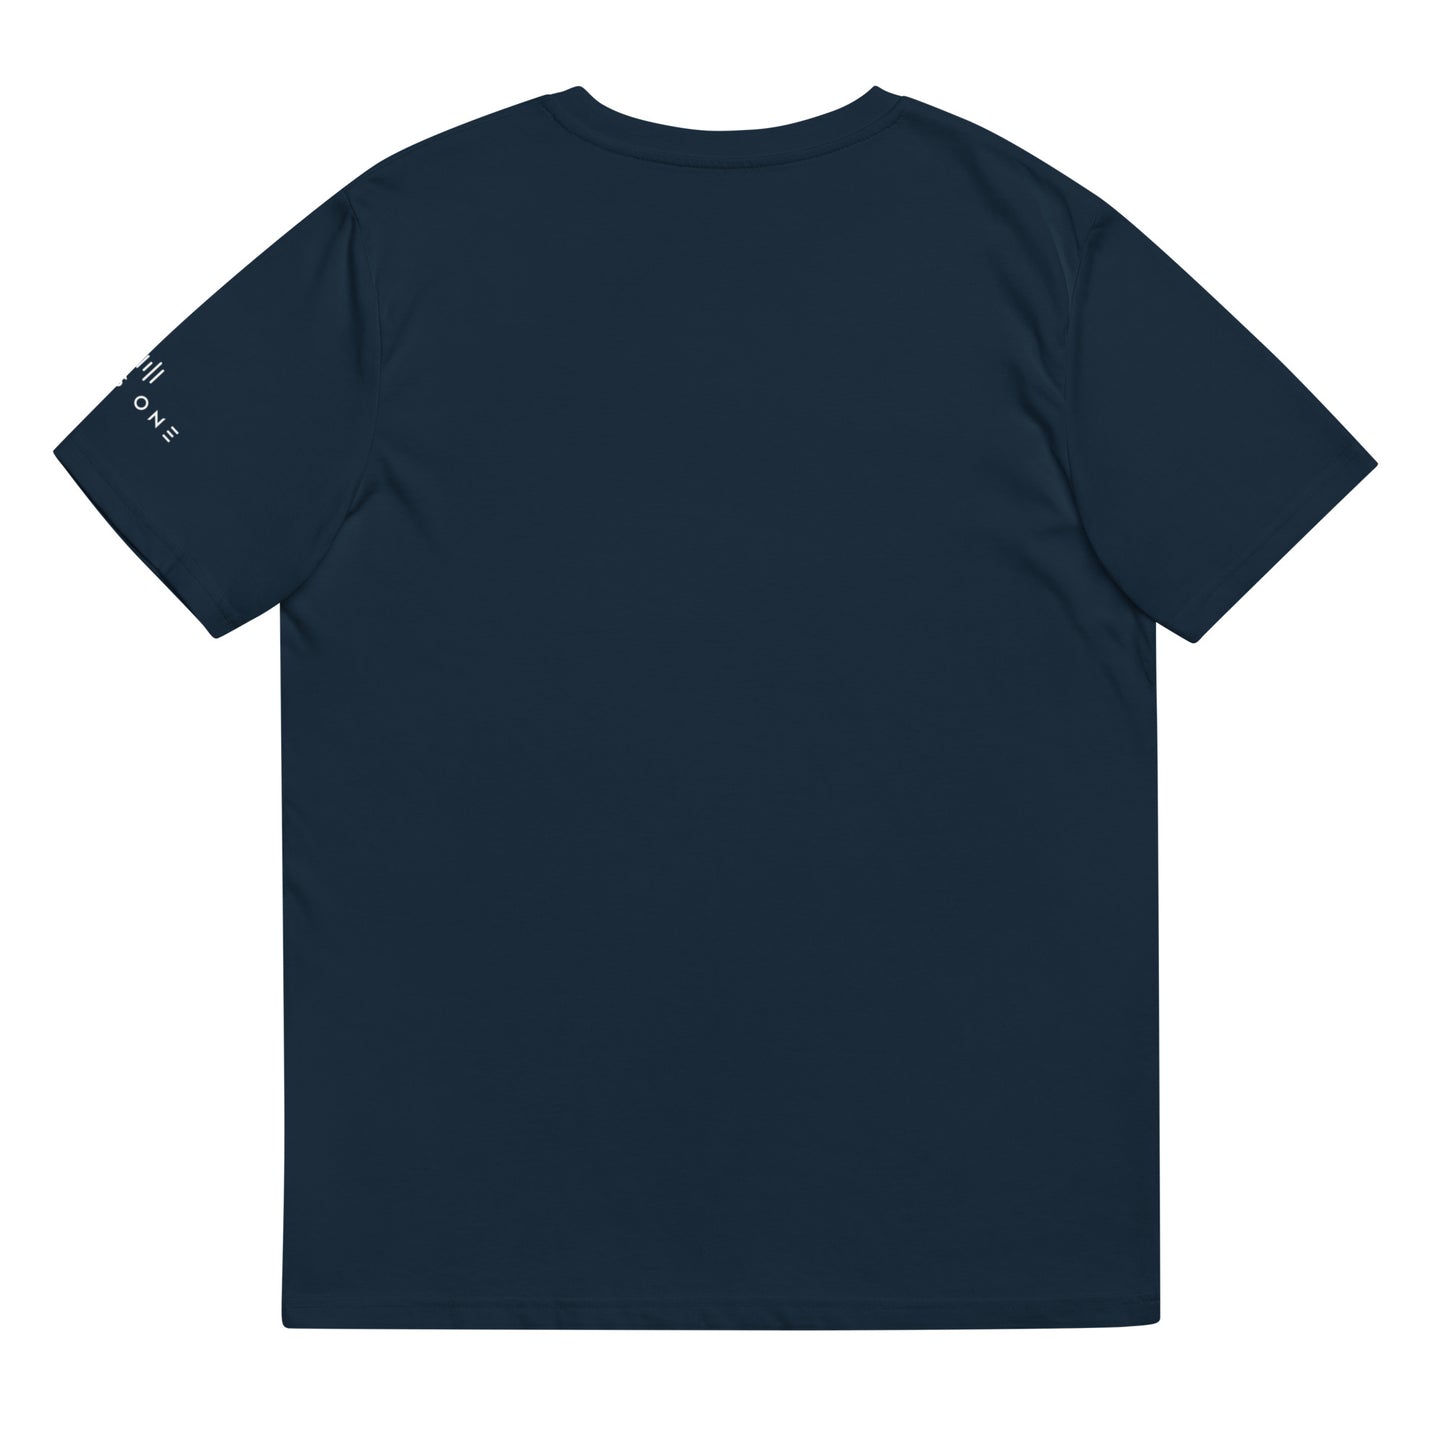 Prototype (v4) Unisex organic cotton t-shirt (White Text)